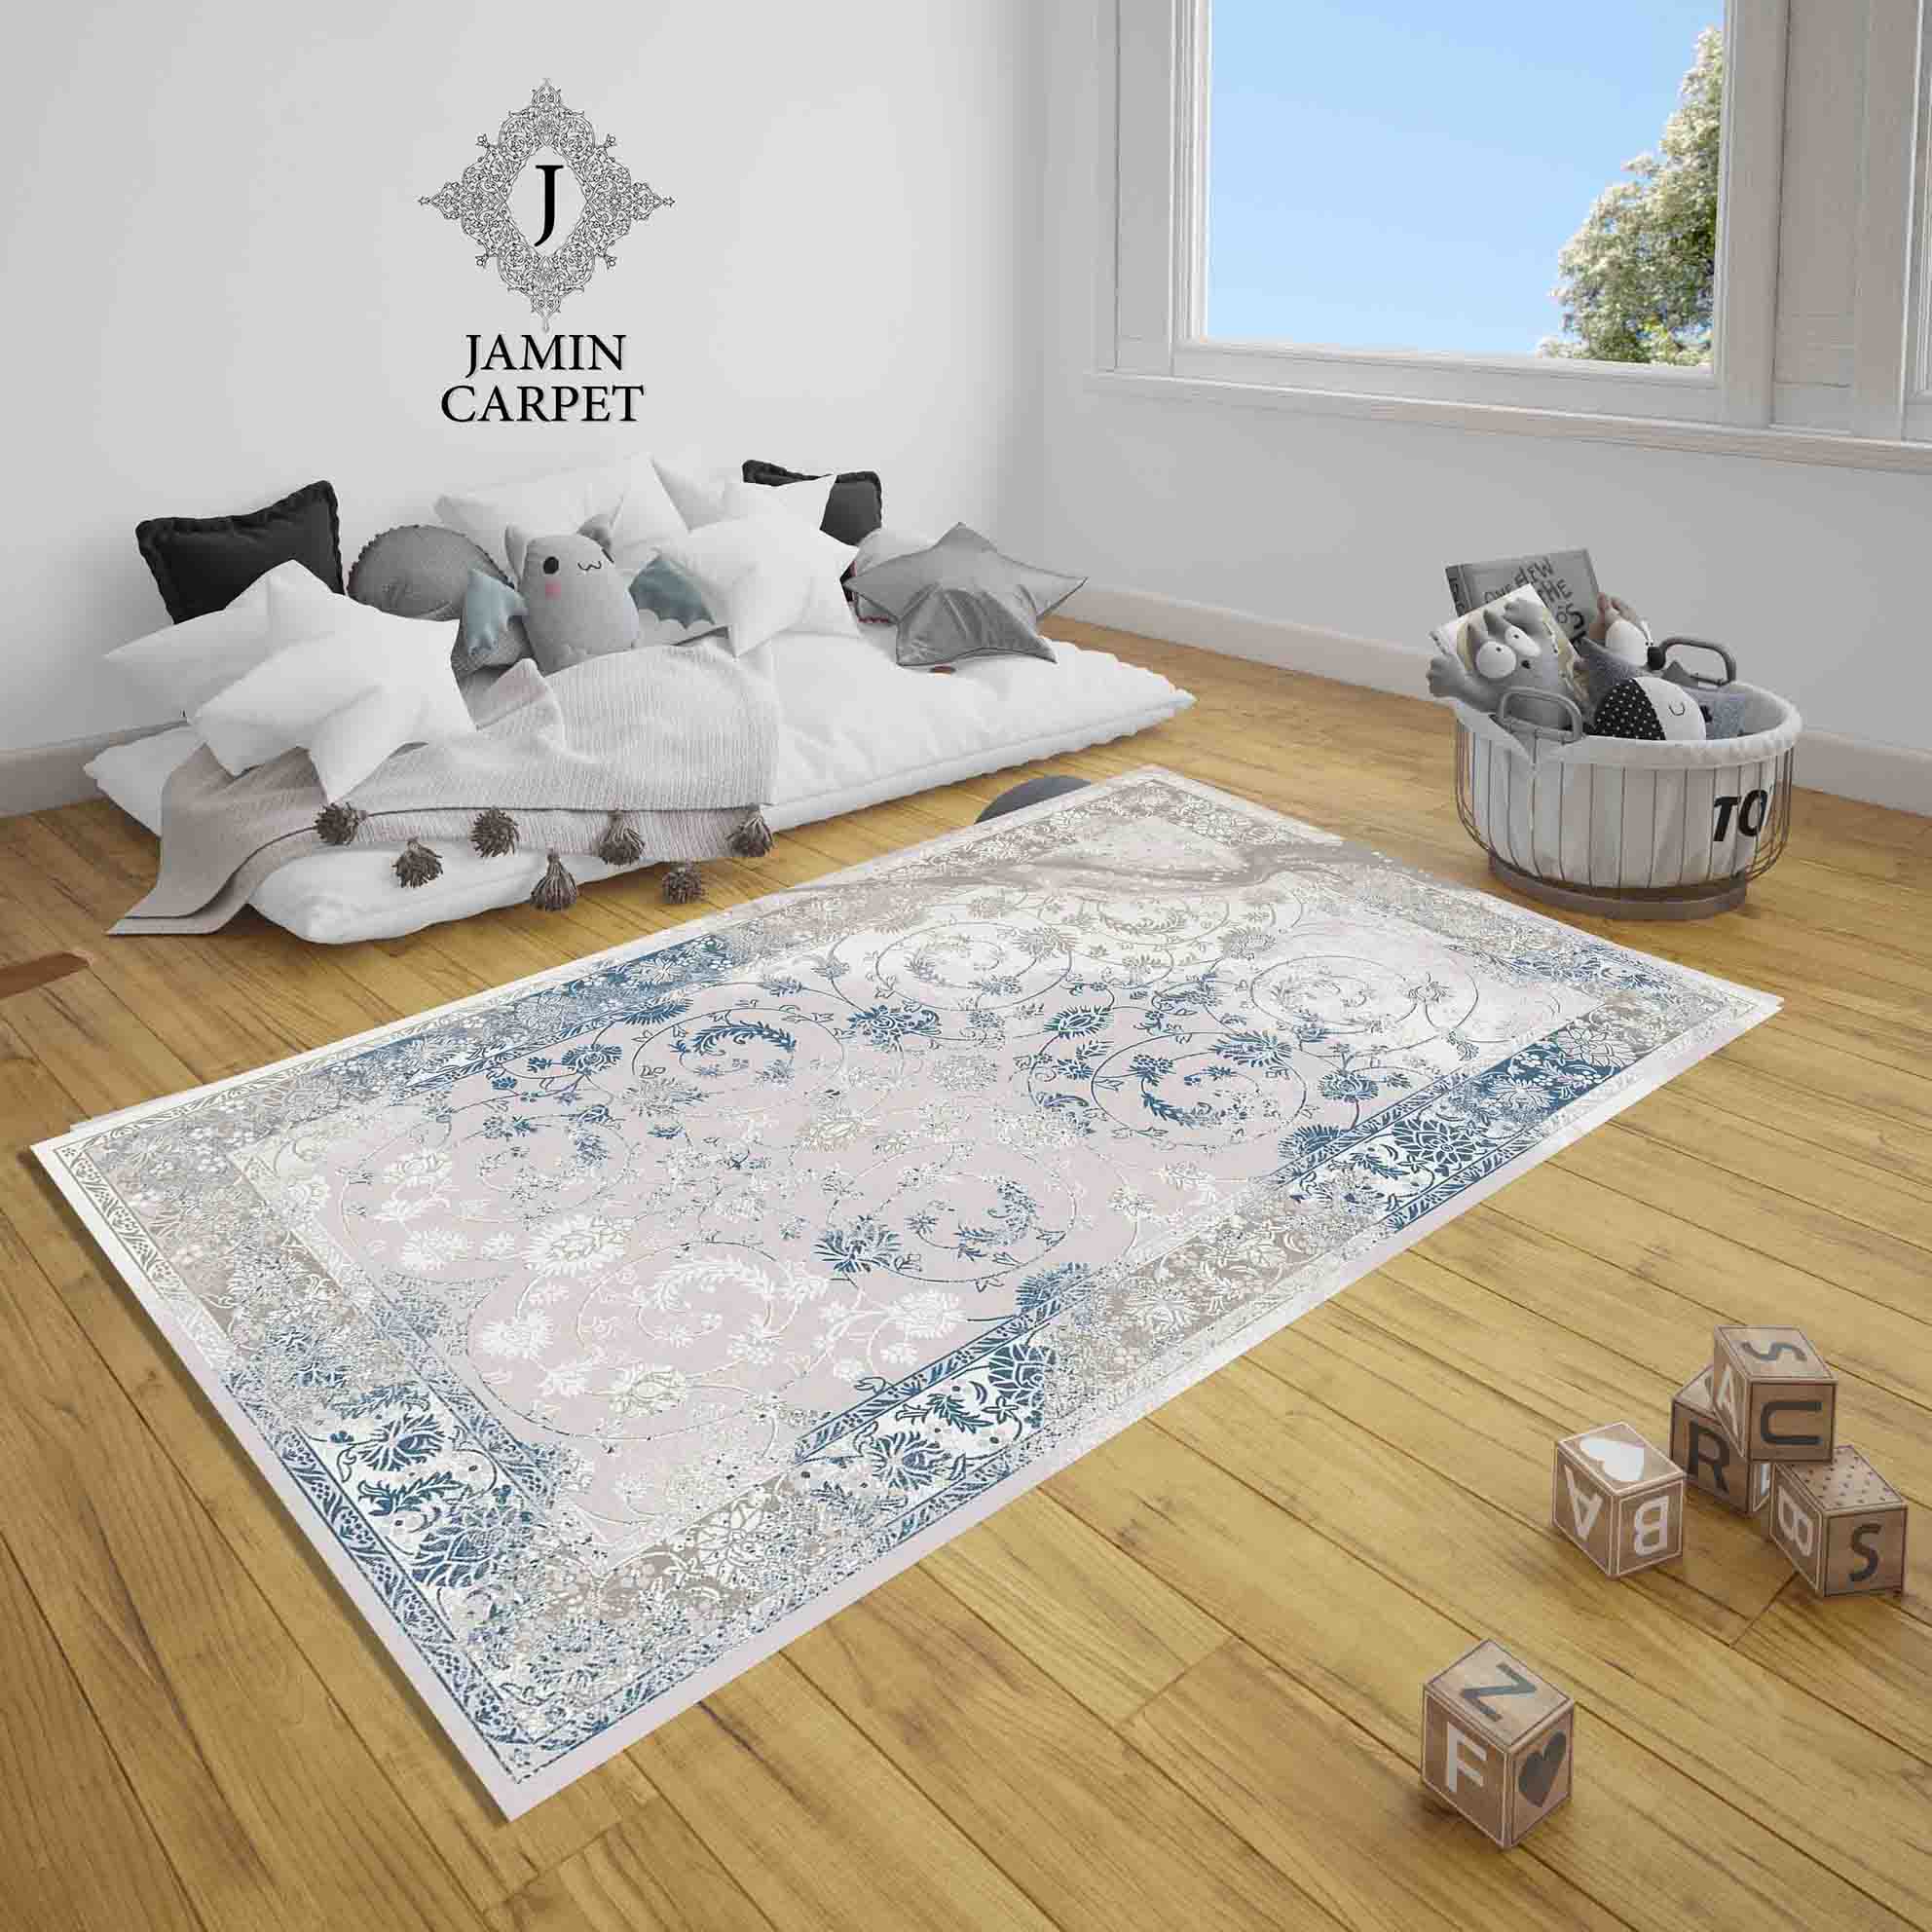 Fantasy carpet, code 265, comb 400, density 1800, all acrylic